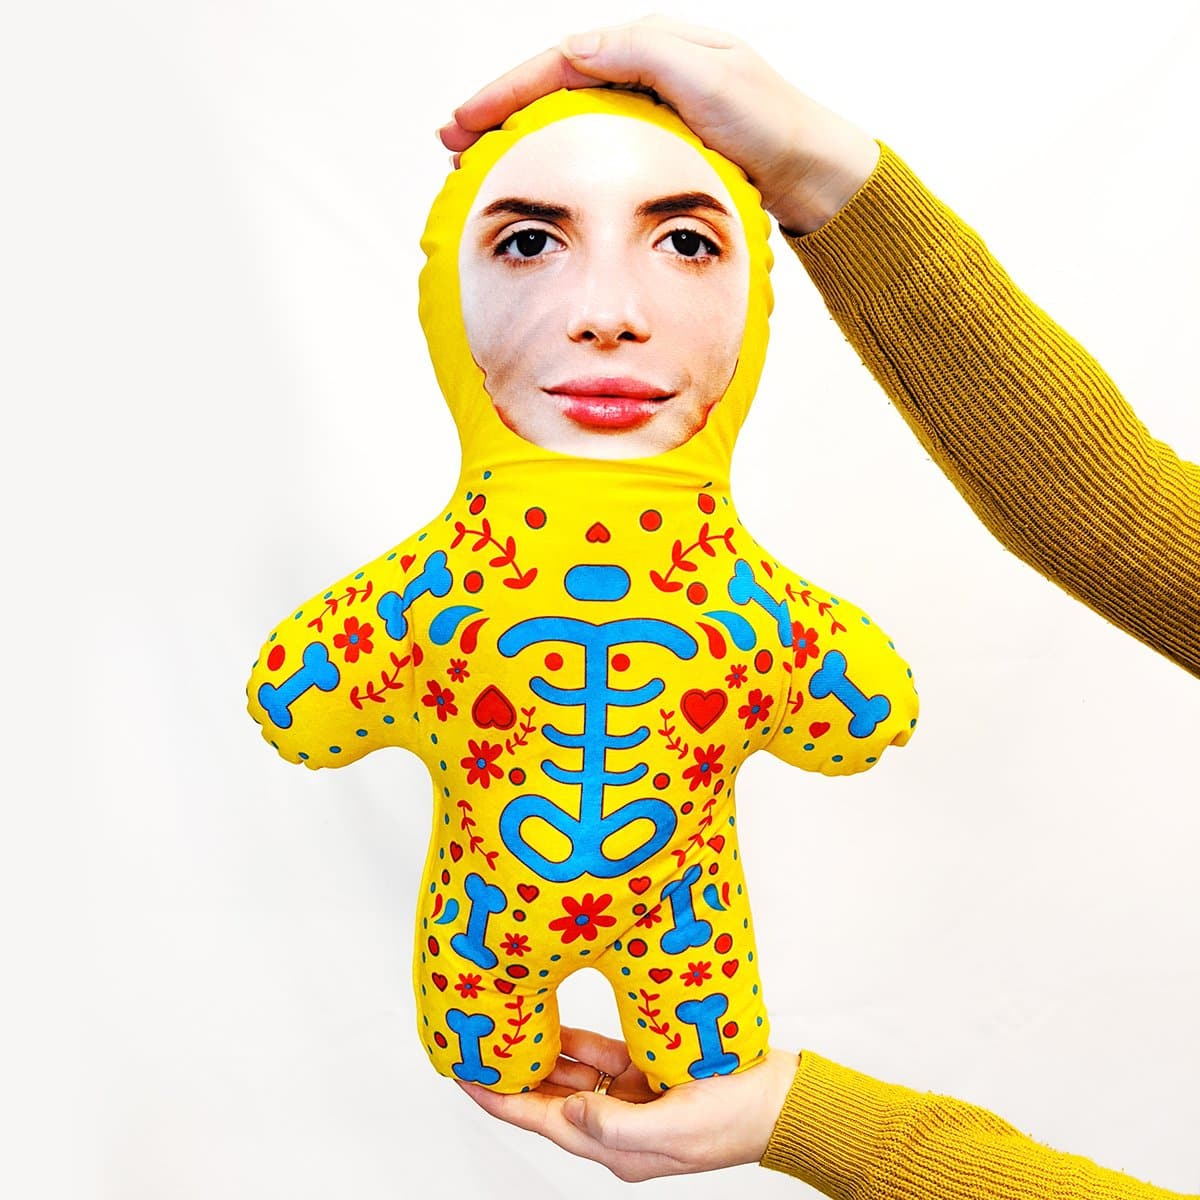 yellow candy skull mini me doll